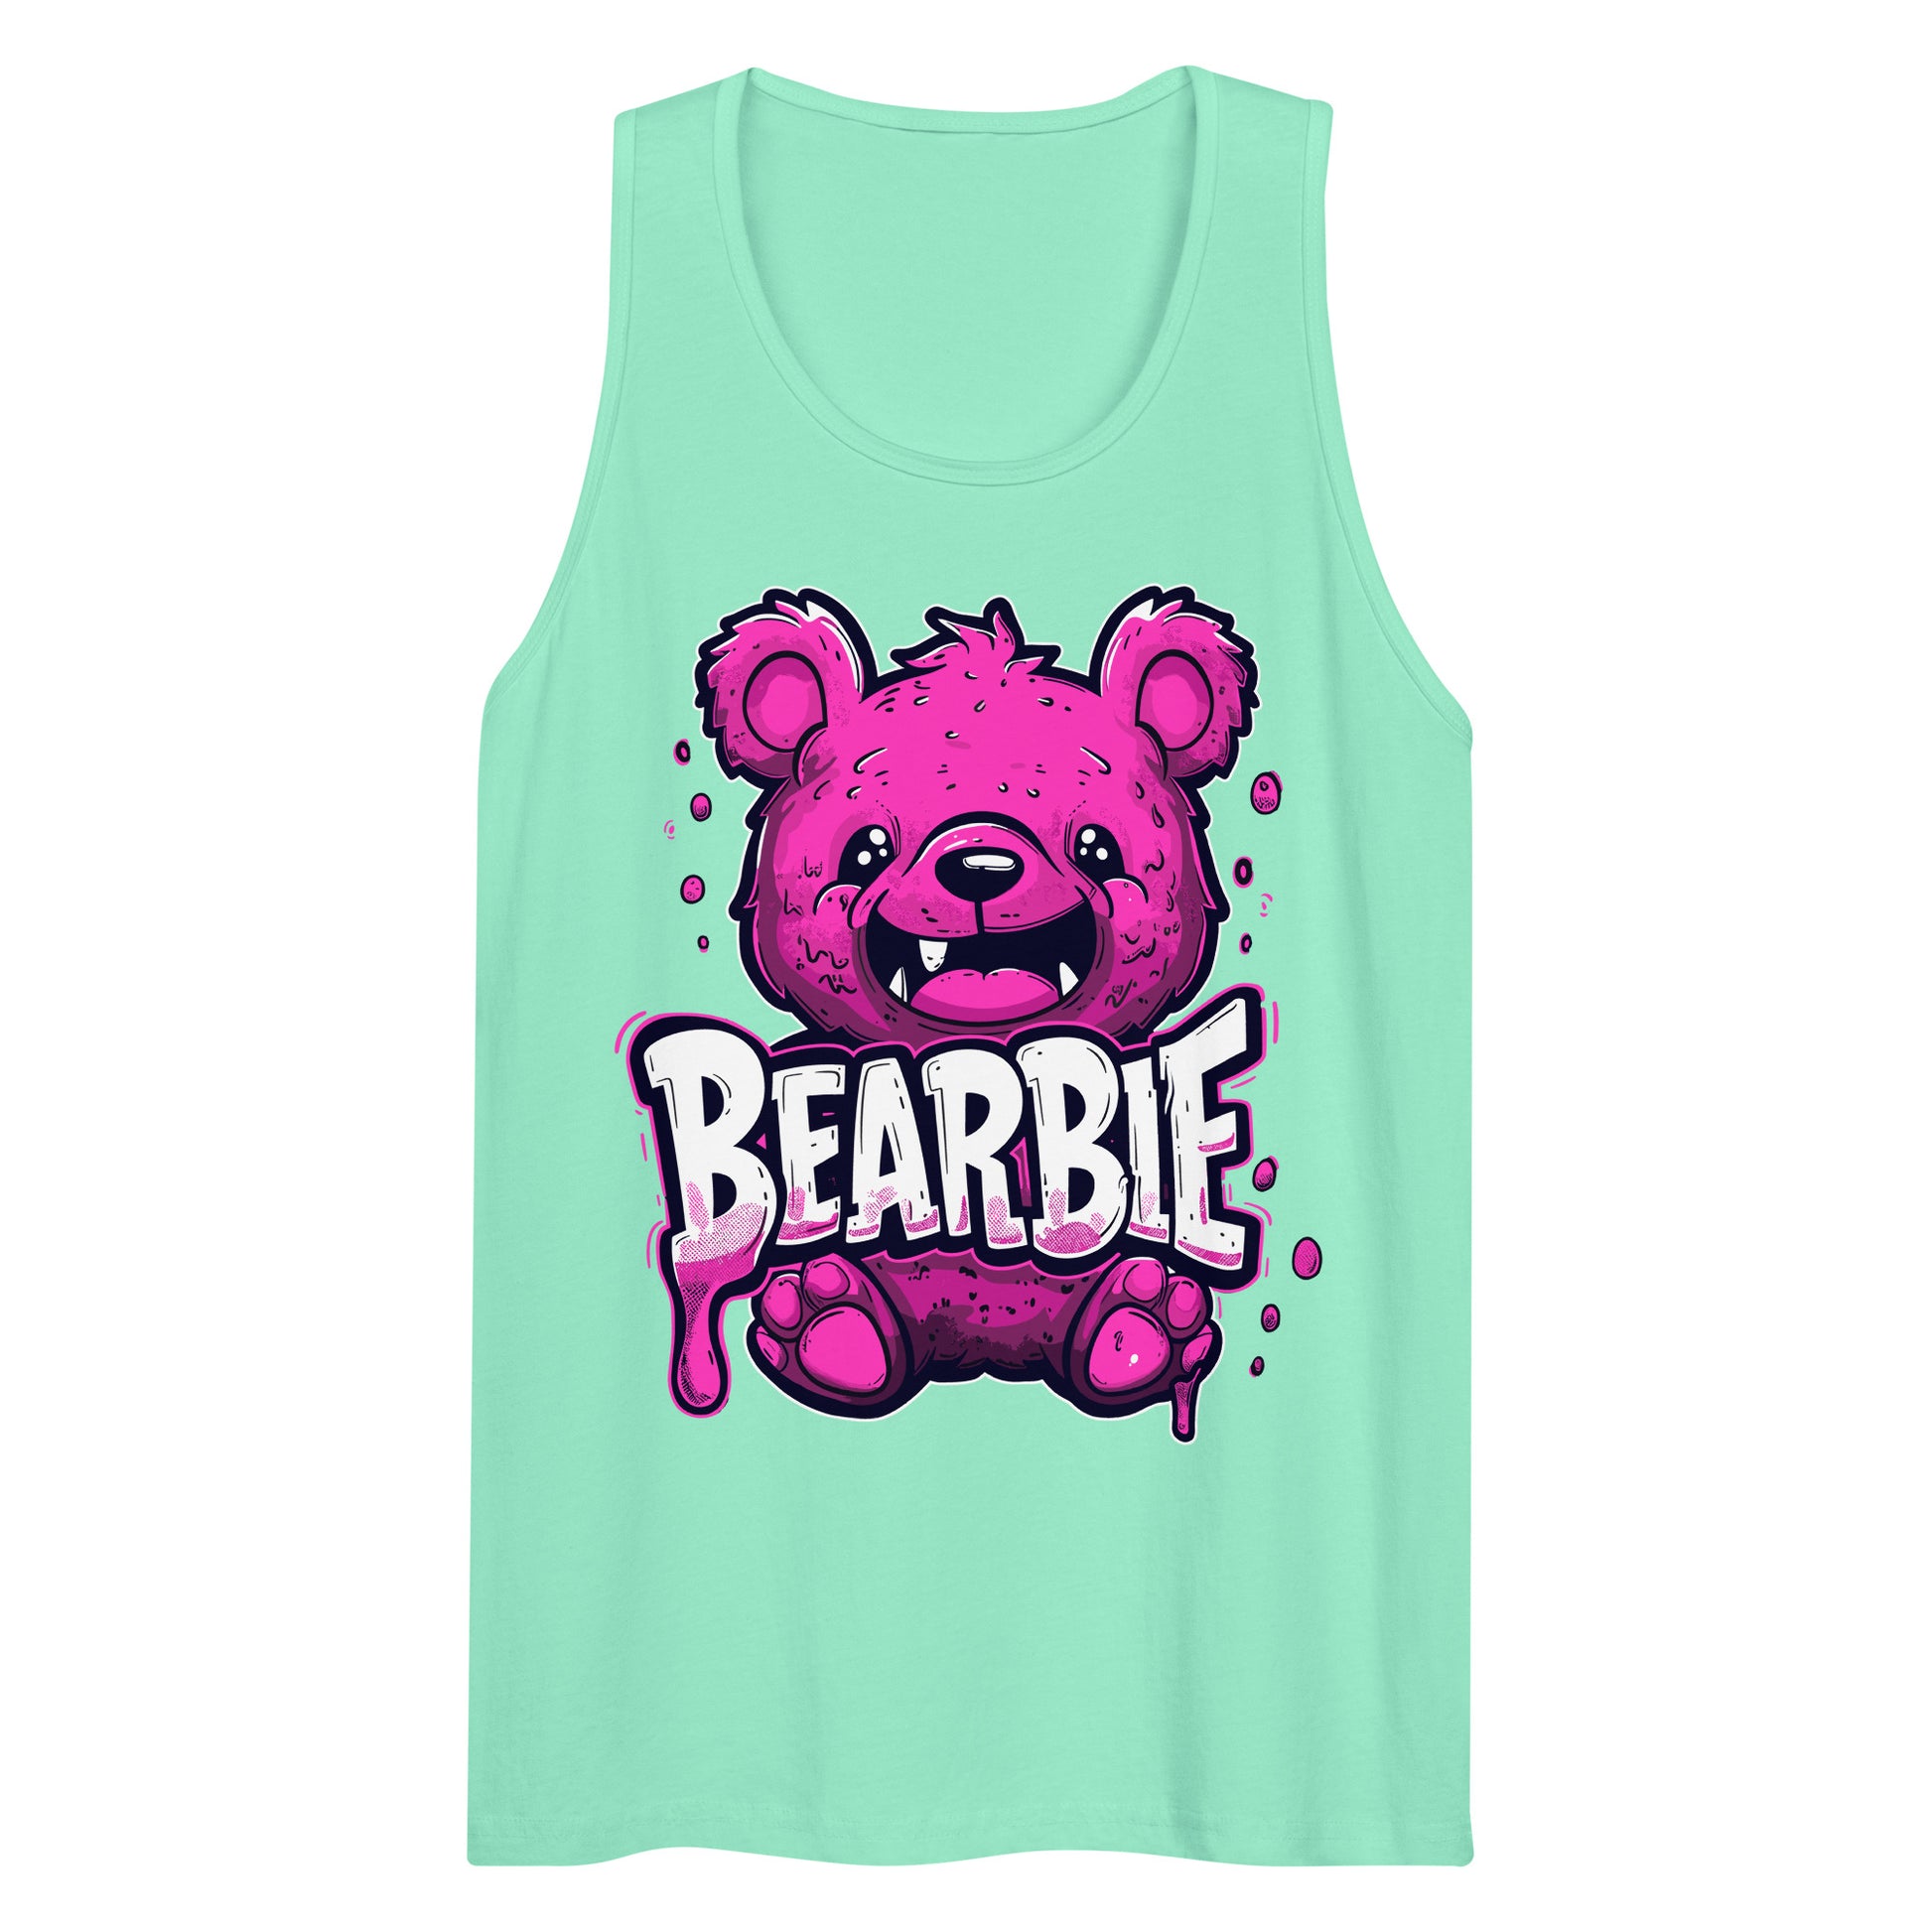 Unleash Your Roar with Bearbie Slogan Gay Bear Tank Top